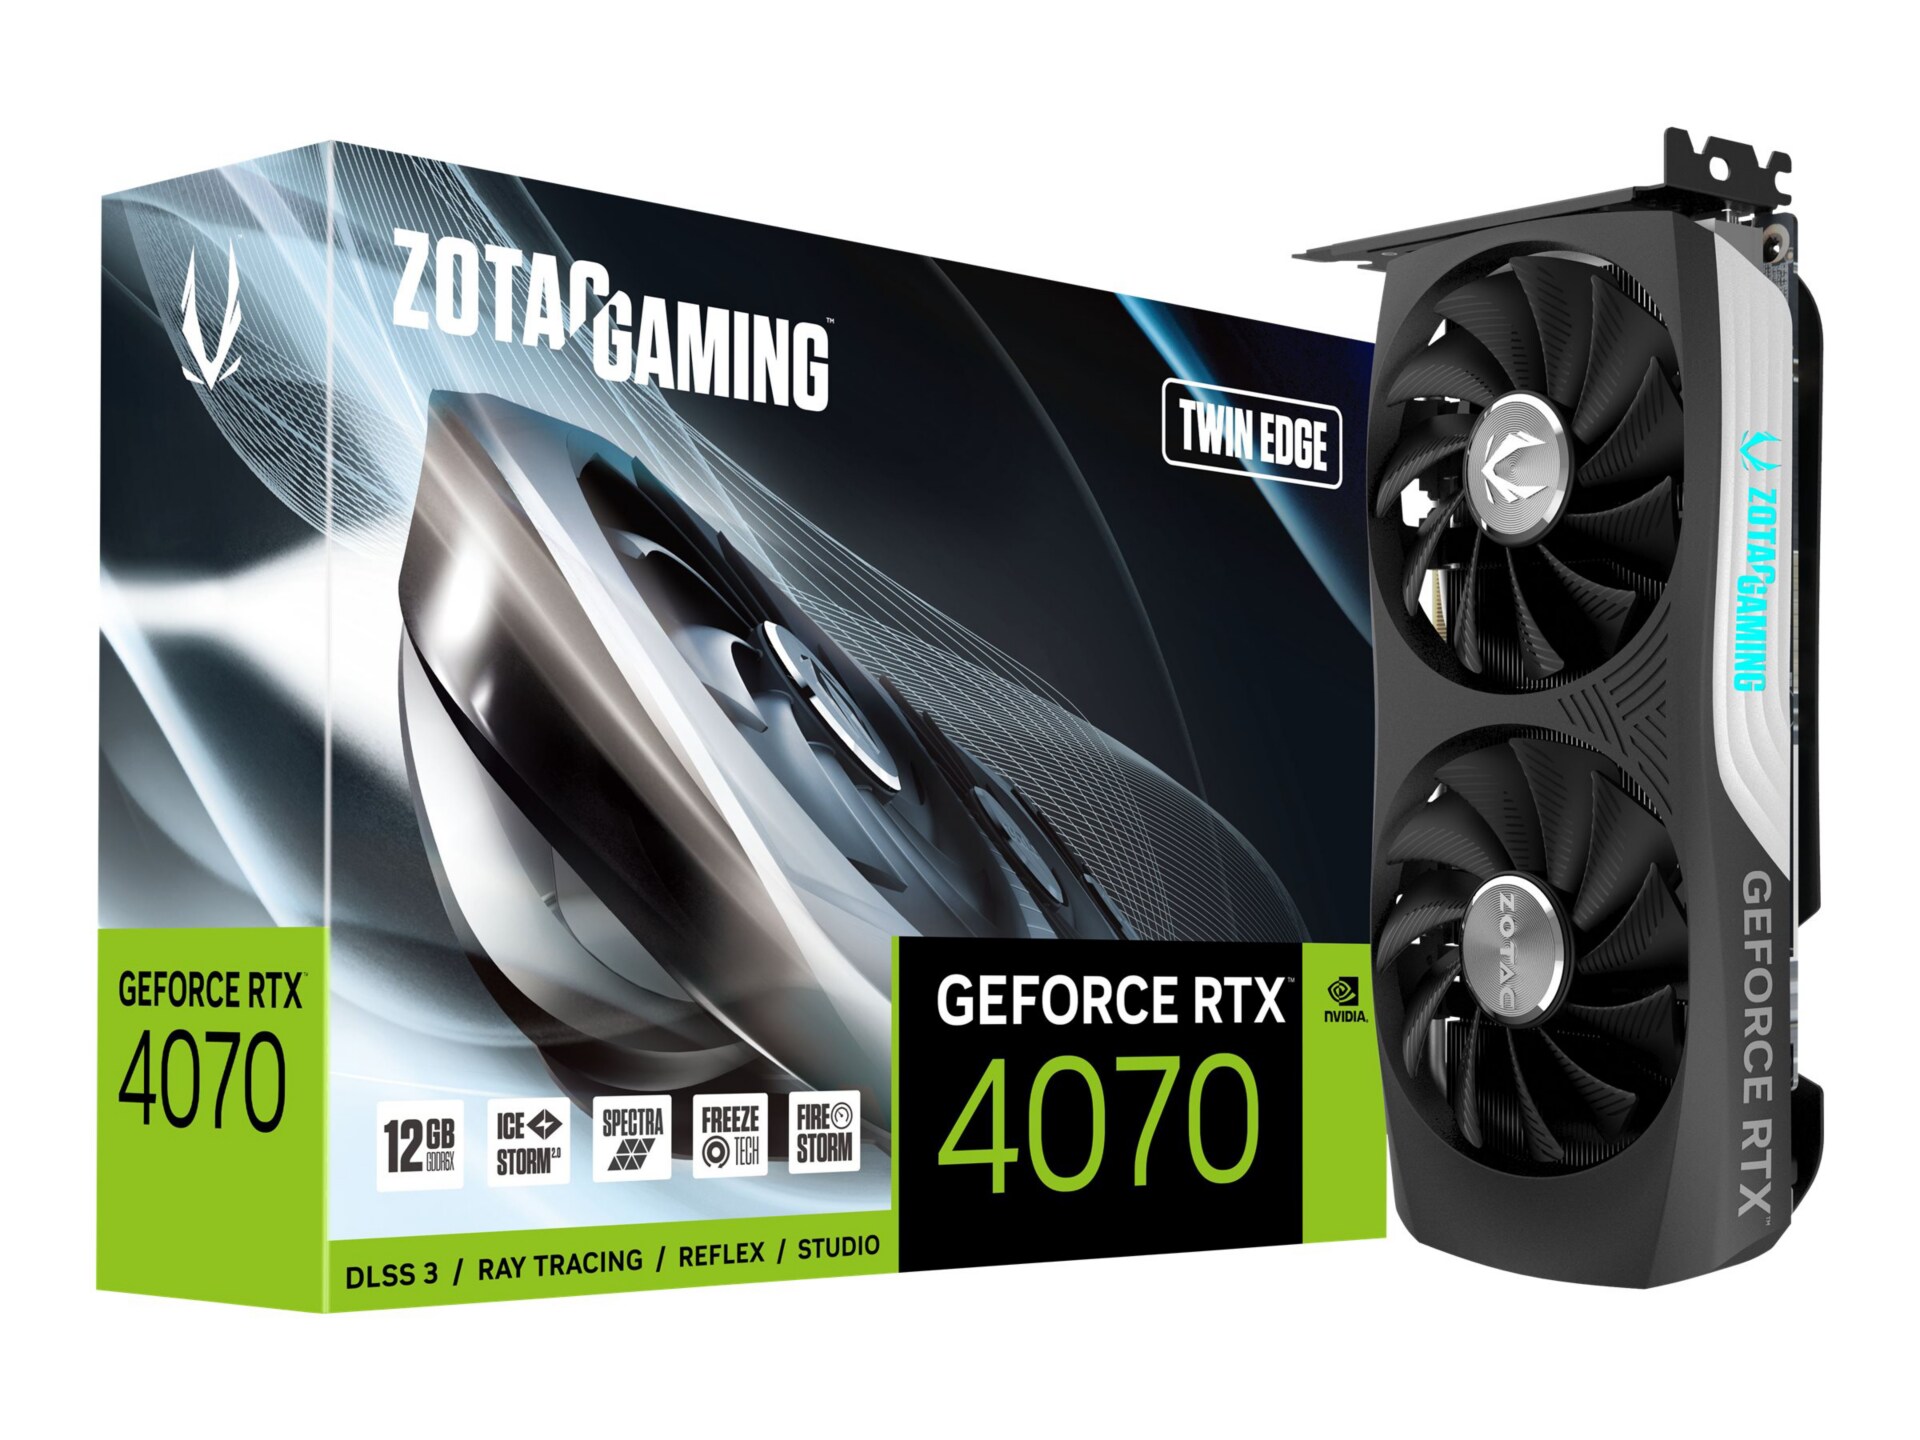 ZOTAC GAMING GeForce RTX 4070 Twin Edge - graphics card - GeForce RTX 4070 - 12 GB